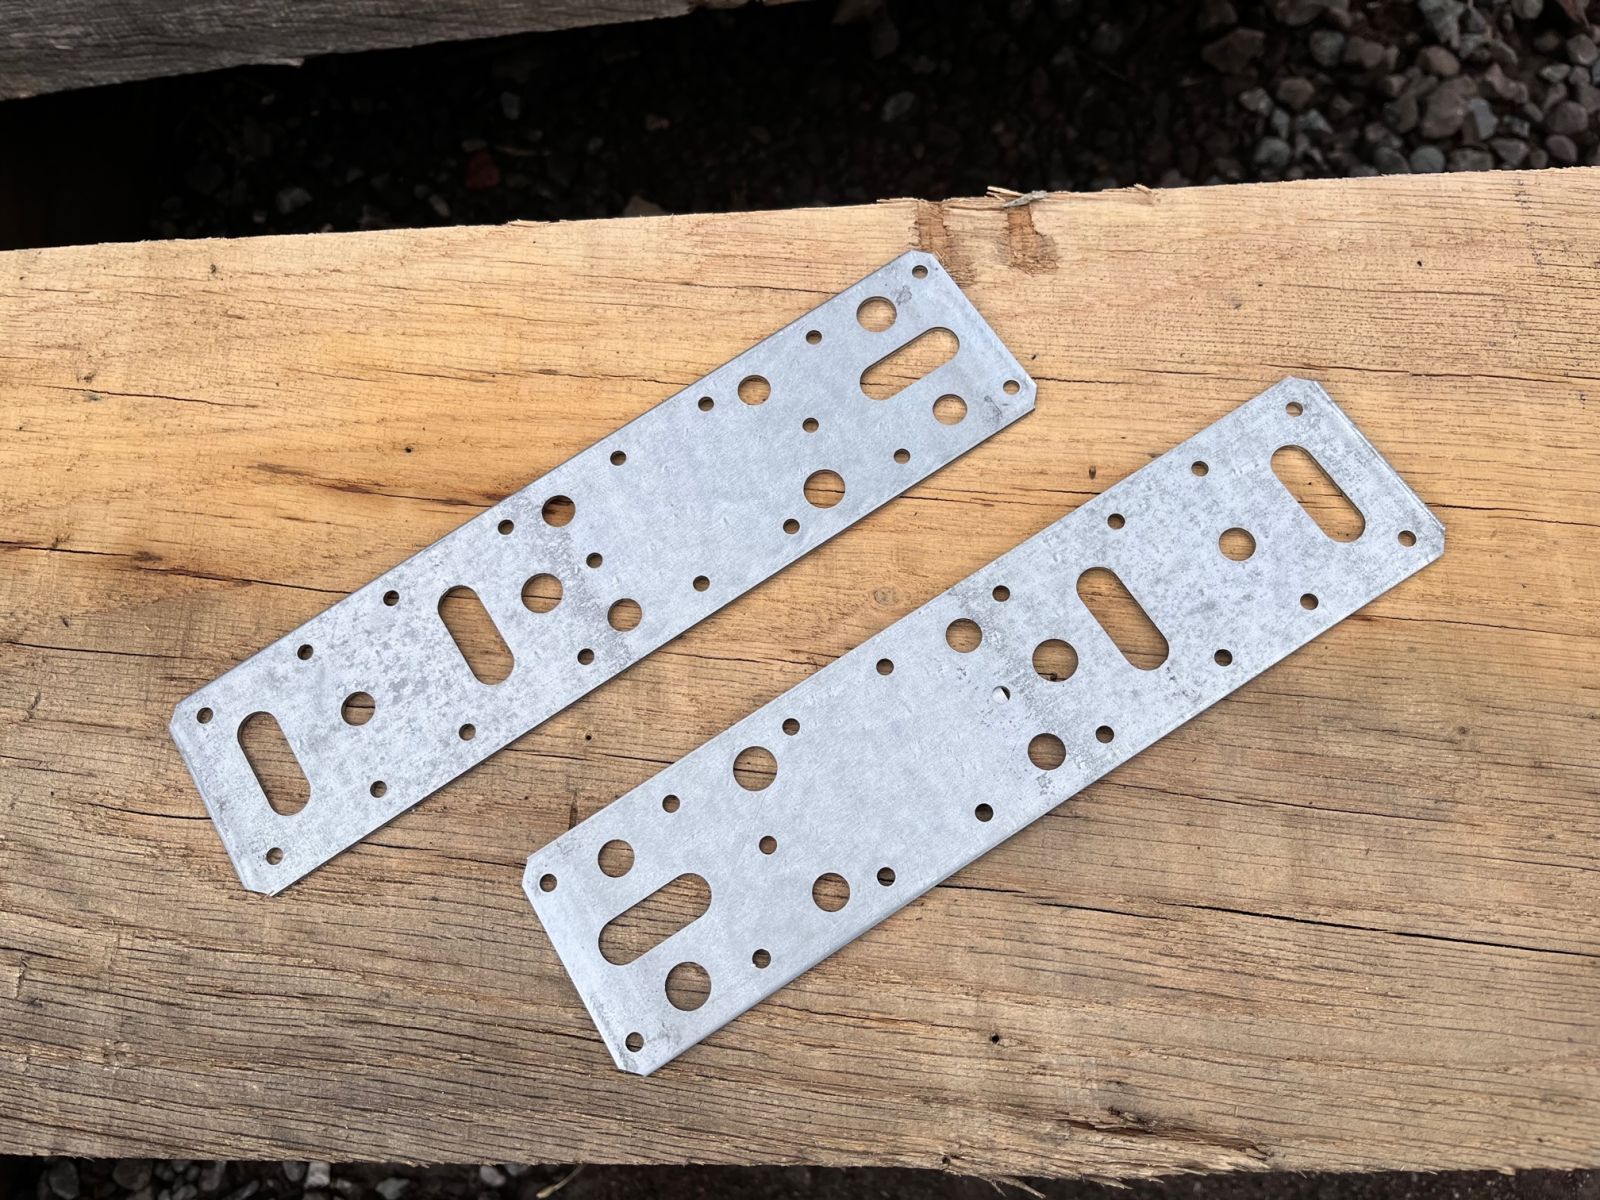 Flat steel connector plate used to fix railway sleepers together. Railwaysleepers.com